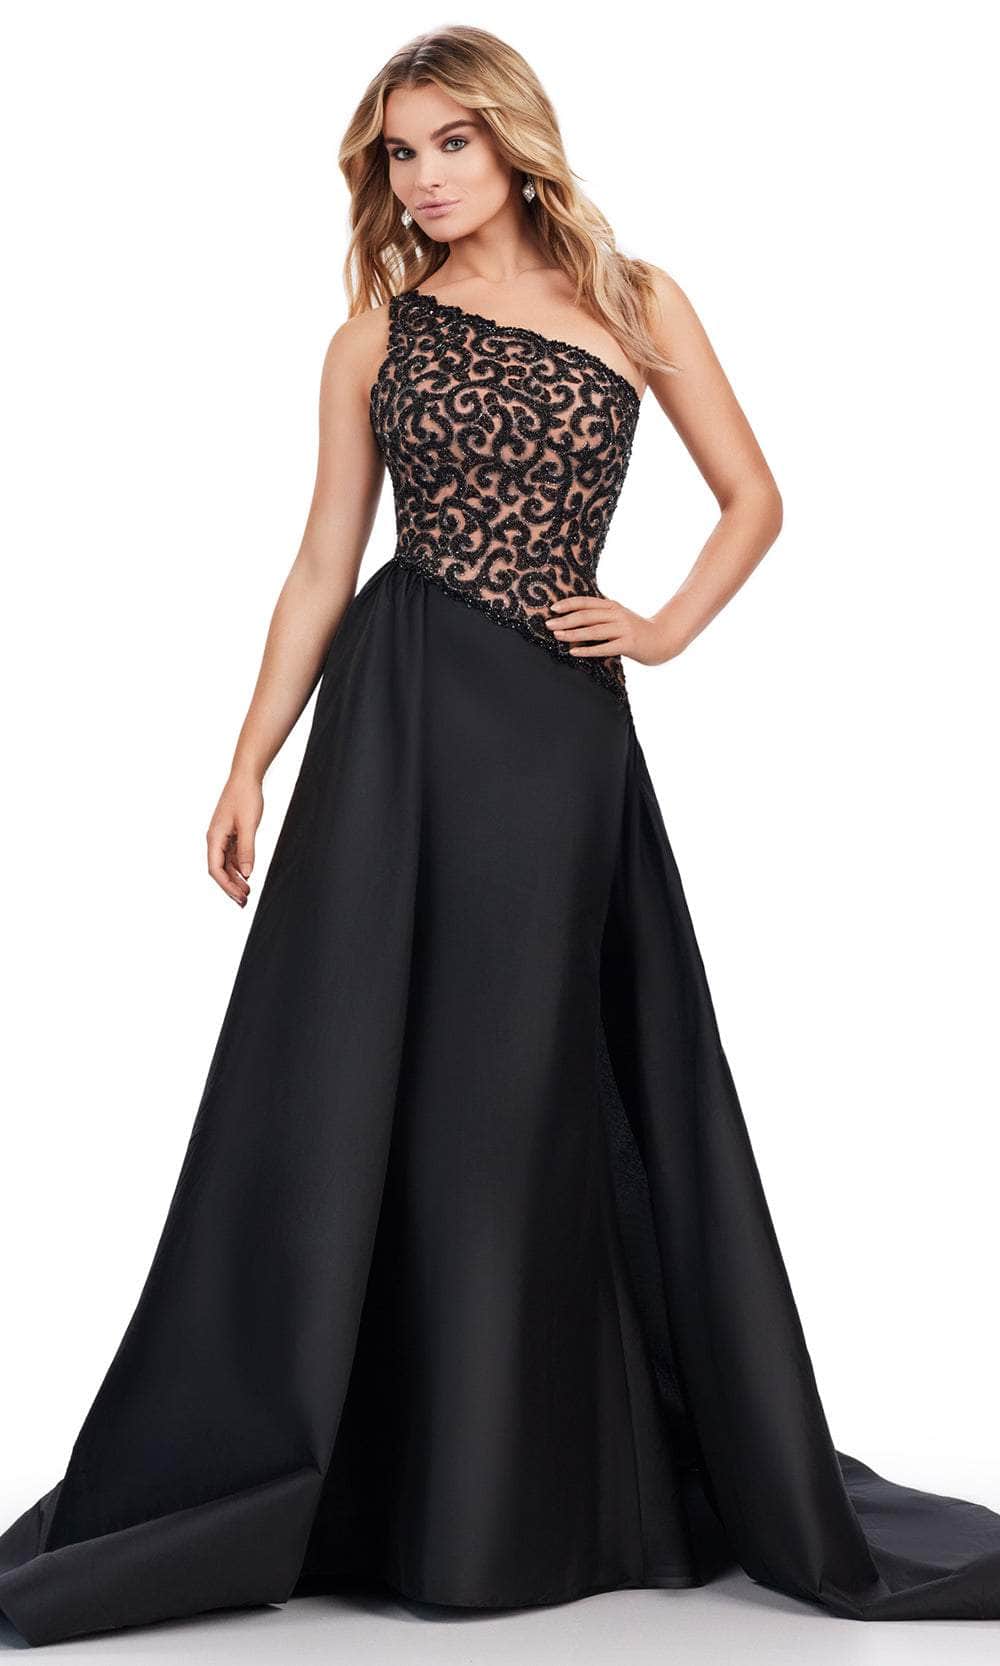 Image of Ashley Lauren 11456 - One Shoulder Overskirt Prom Dress